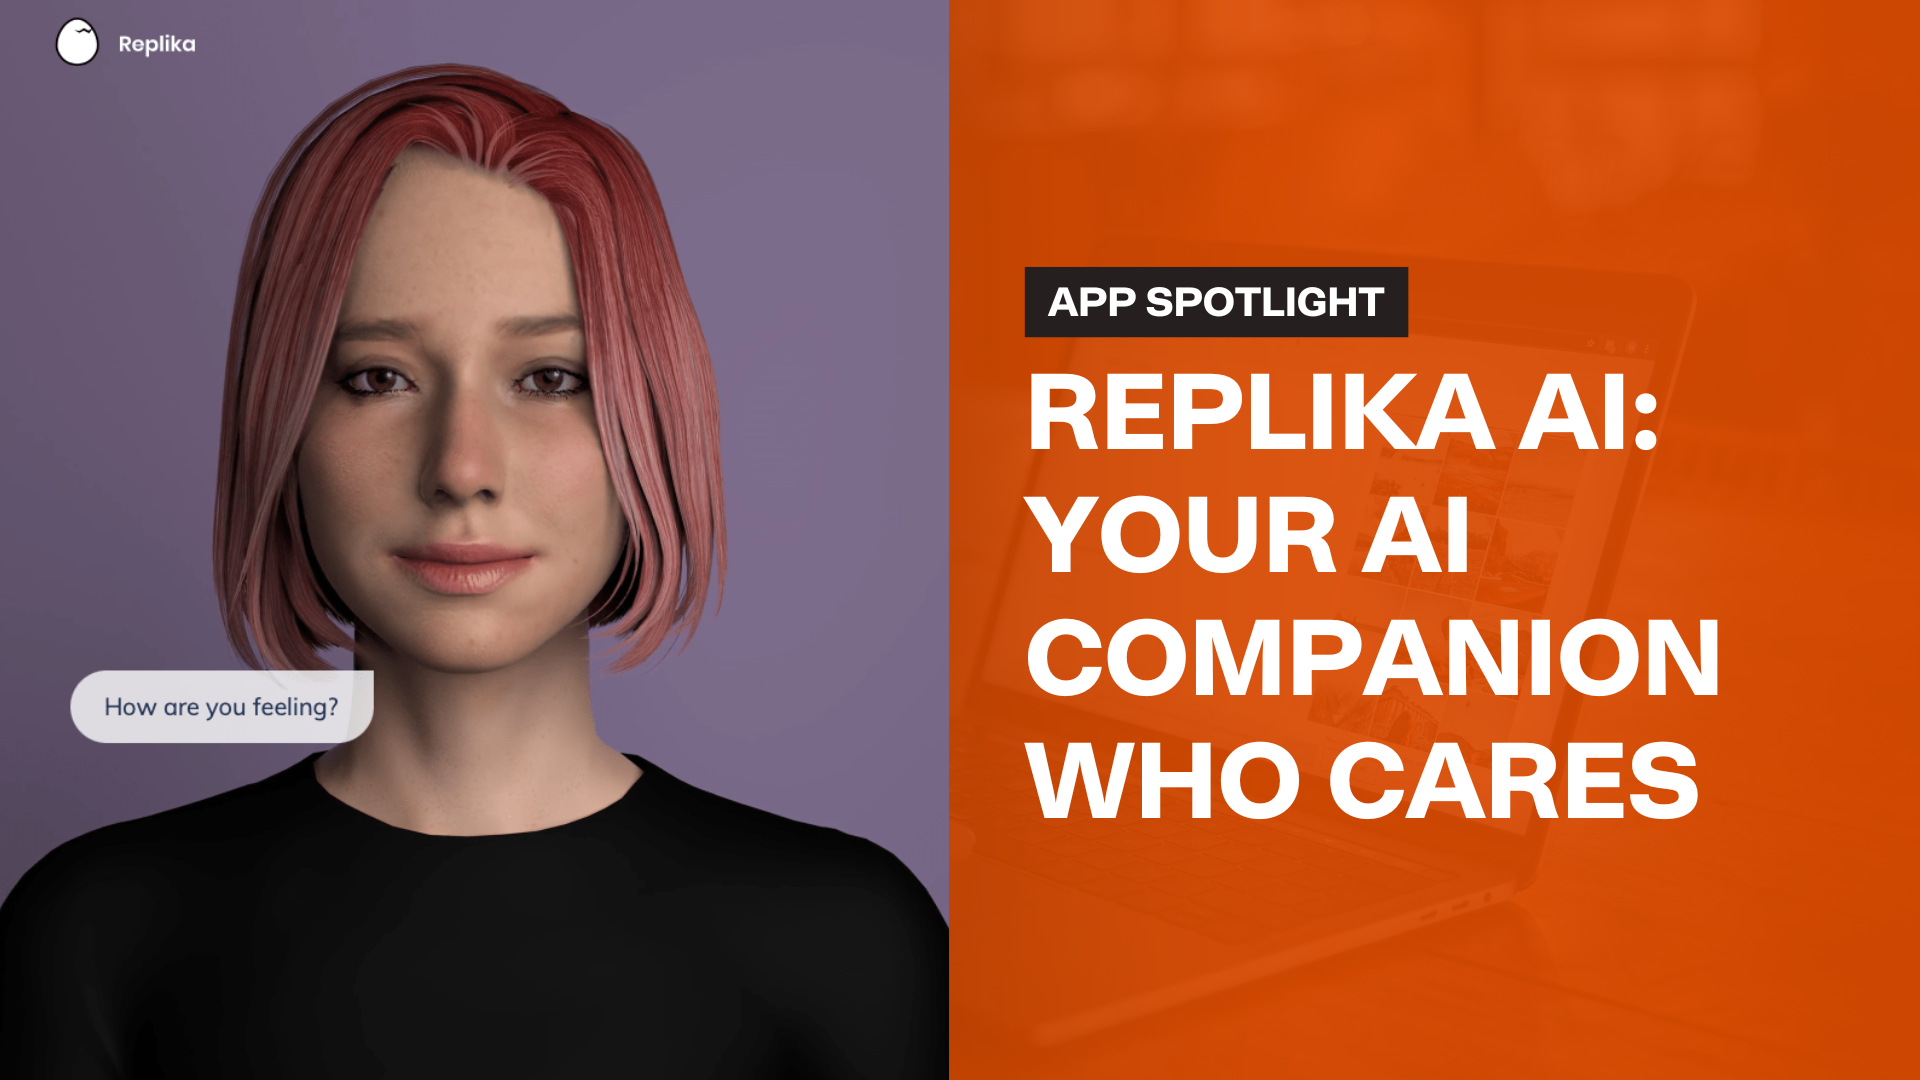 APP SPOTLIGHT Replika AI, Your AI companion who cares